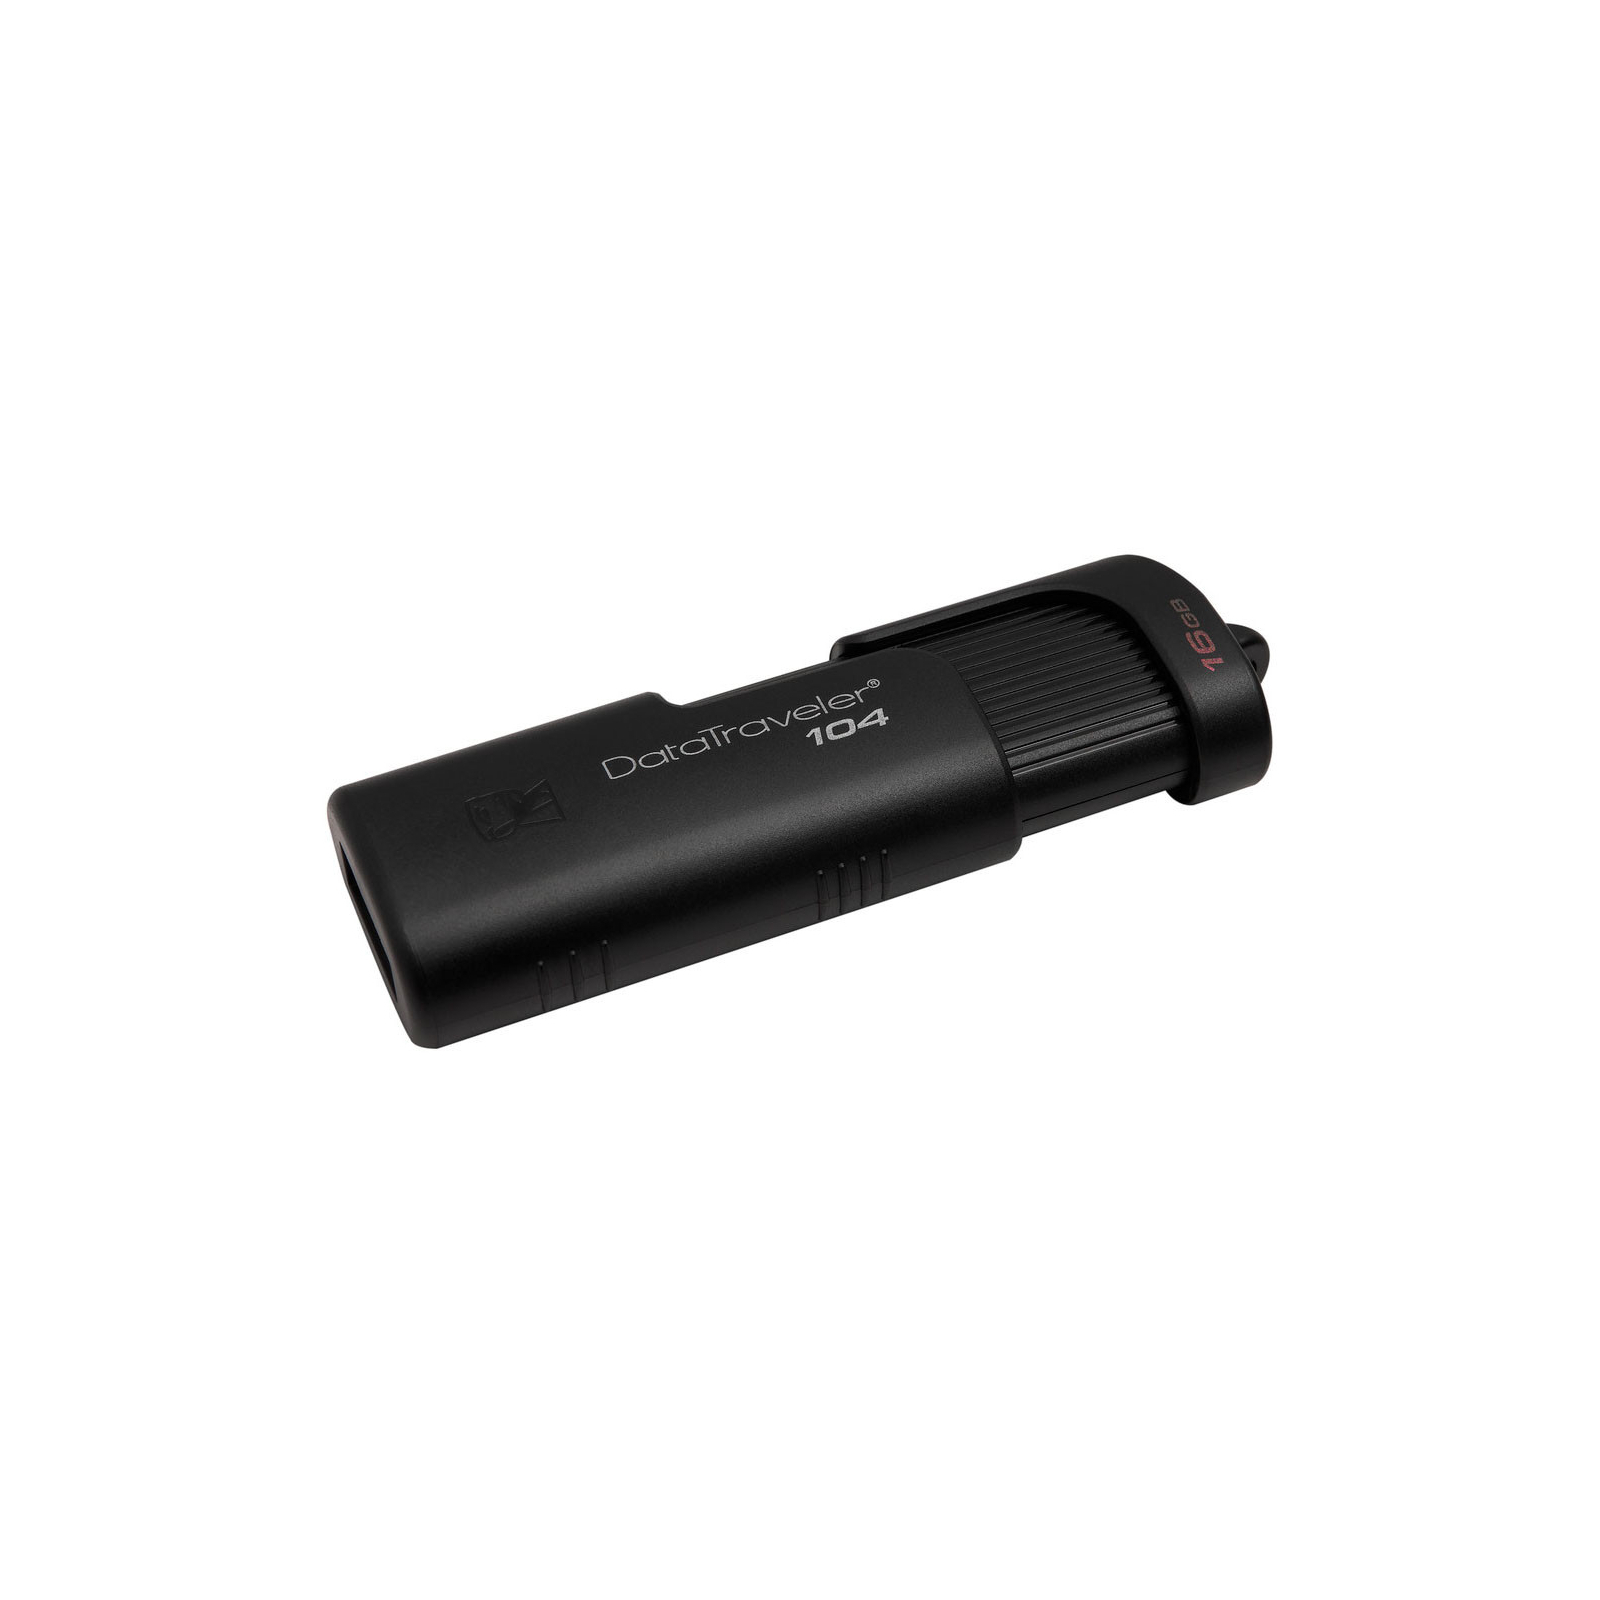 USB флеш накопитель Kingston 16GB DataTraveller 104 Black USB 2.0 (DT104/16GB) изображение 2